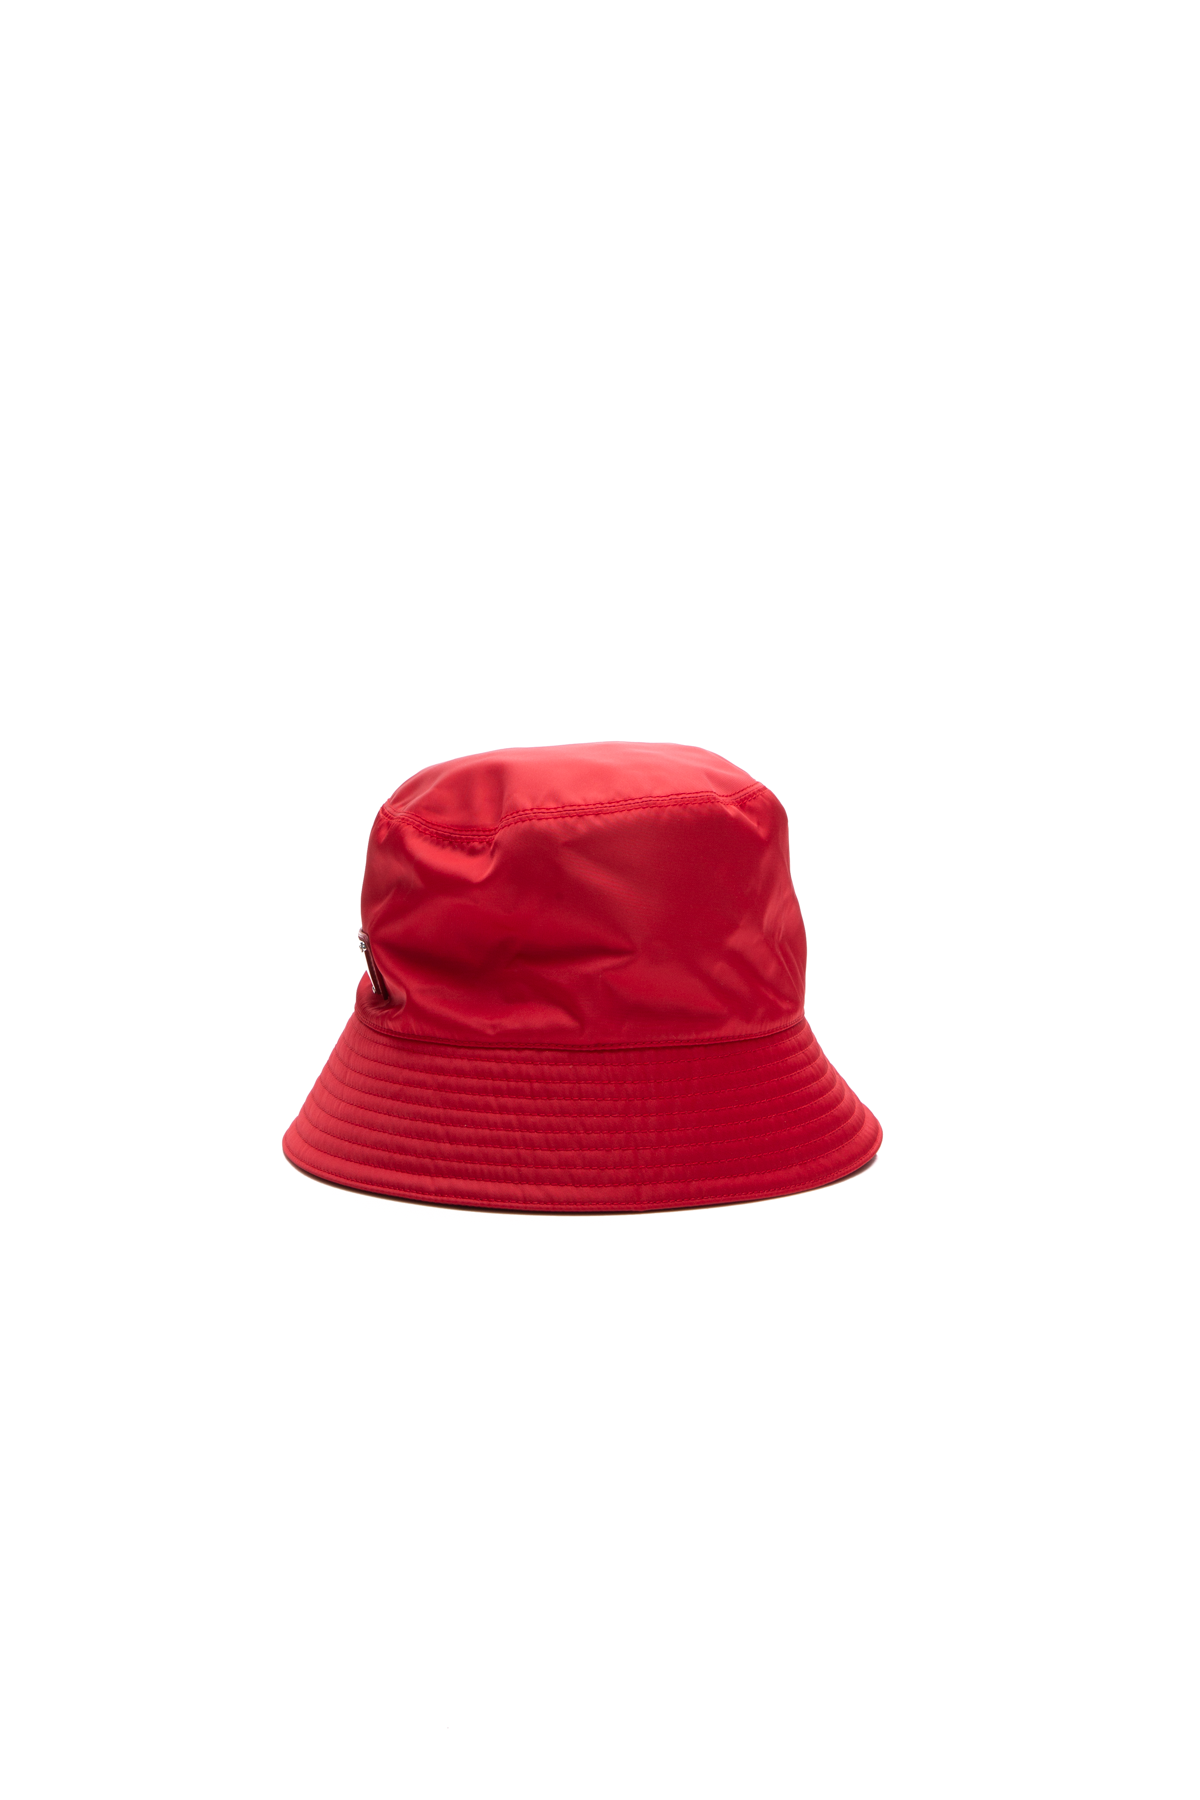 Prada Re-Nylon Bucket Hat - Couture USA